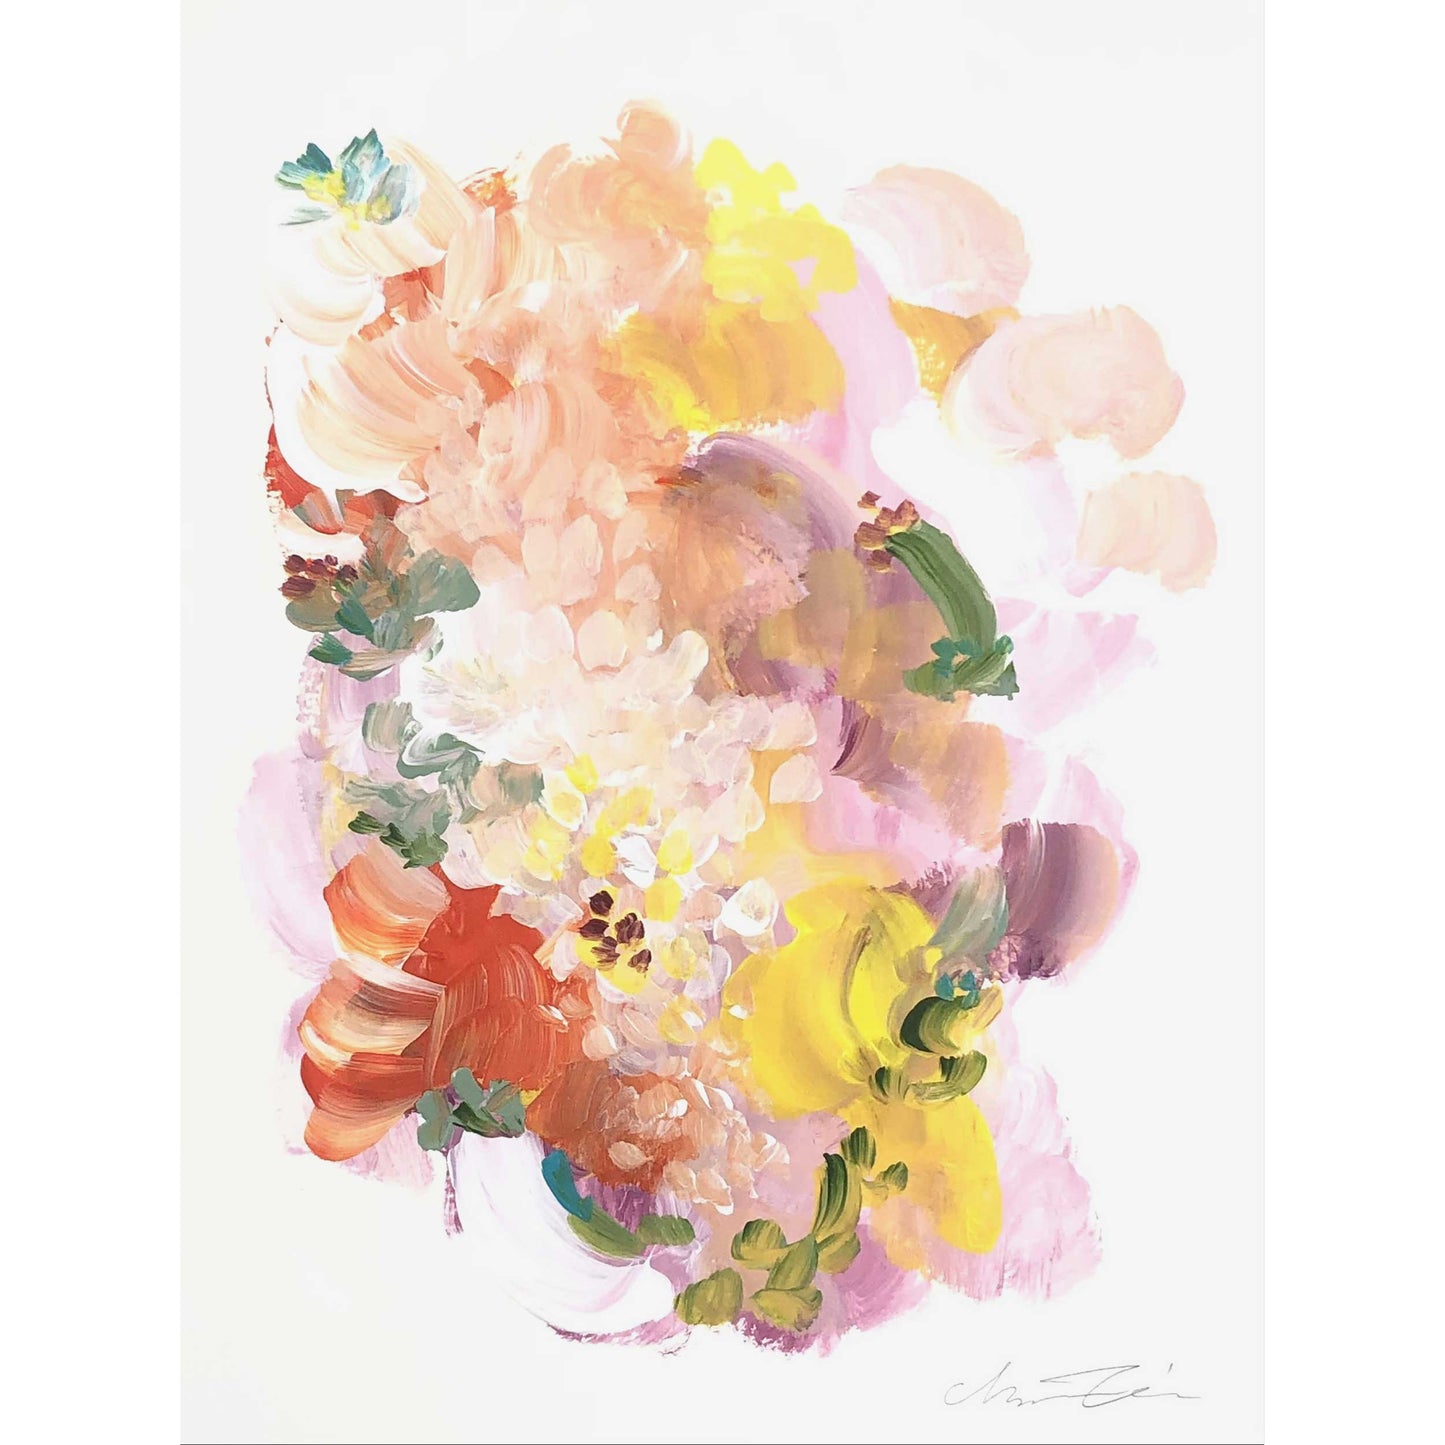 ACP-BL-012 "Bloom" #12 (12x9) Original acrylic abstract painting by Chizu Omori Art